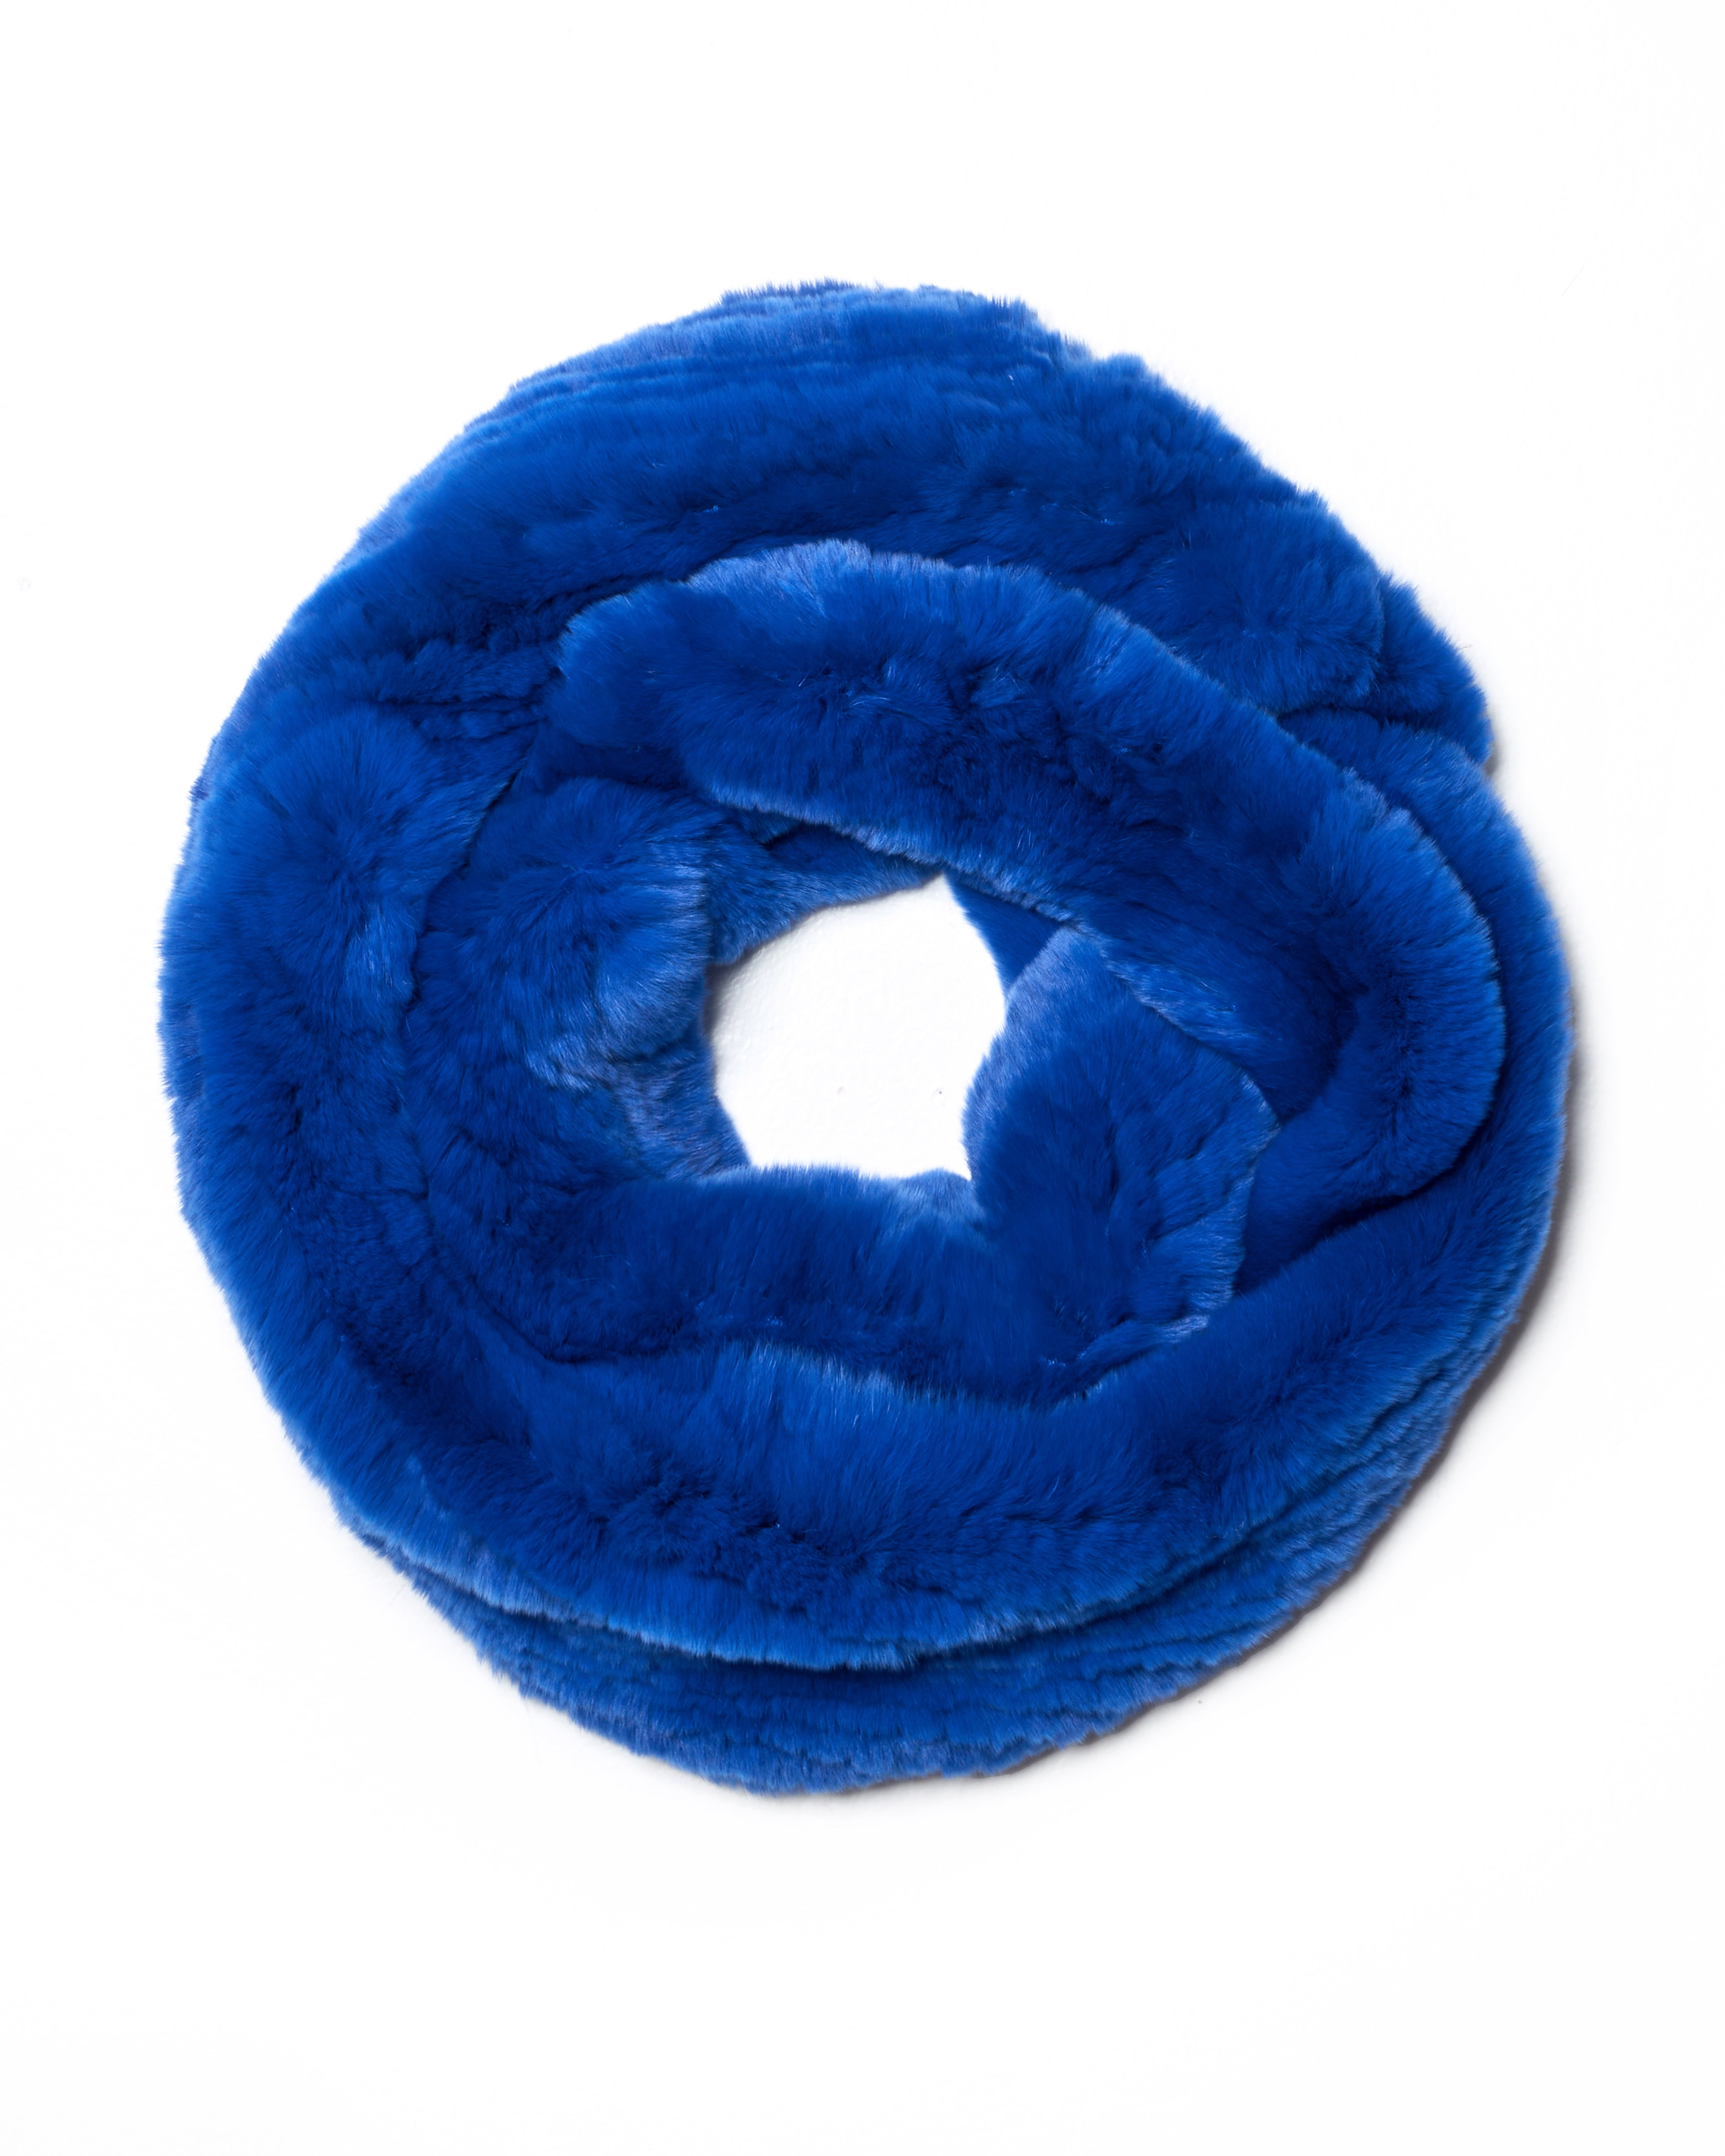 FRR Fleur Rex Rabbit Fur Infinity Scarf in Blue Galaxy at Fur Hat World